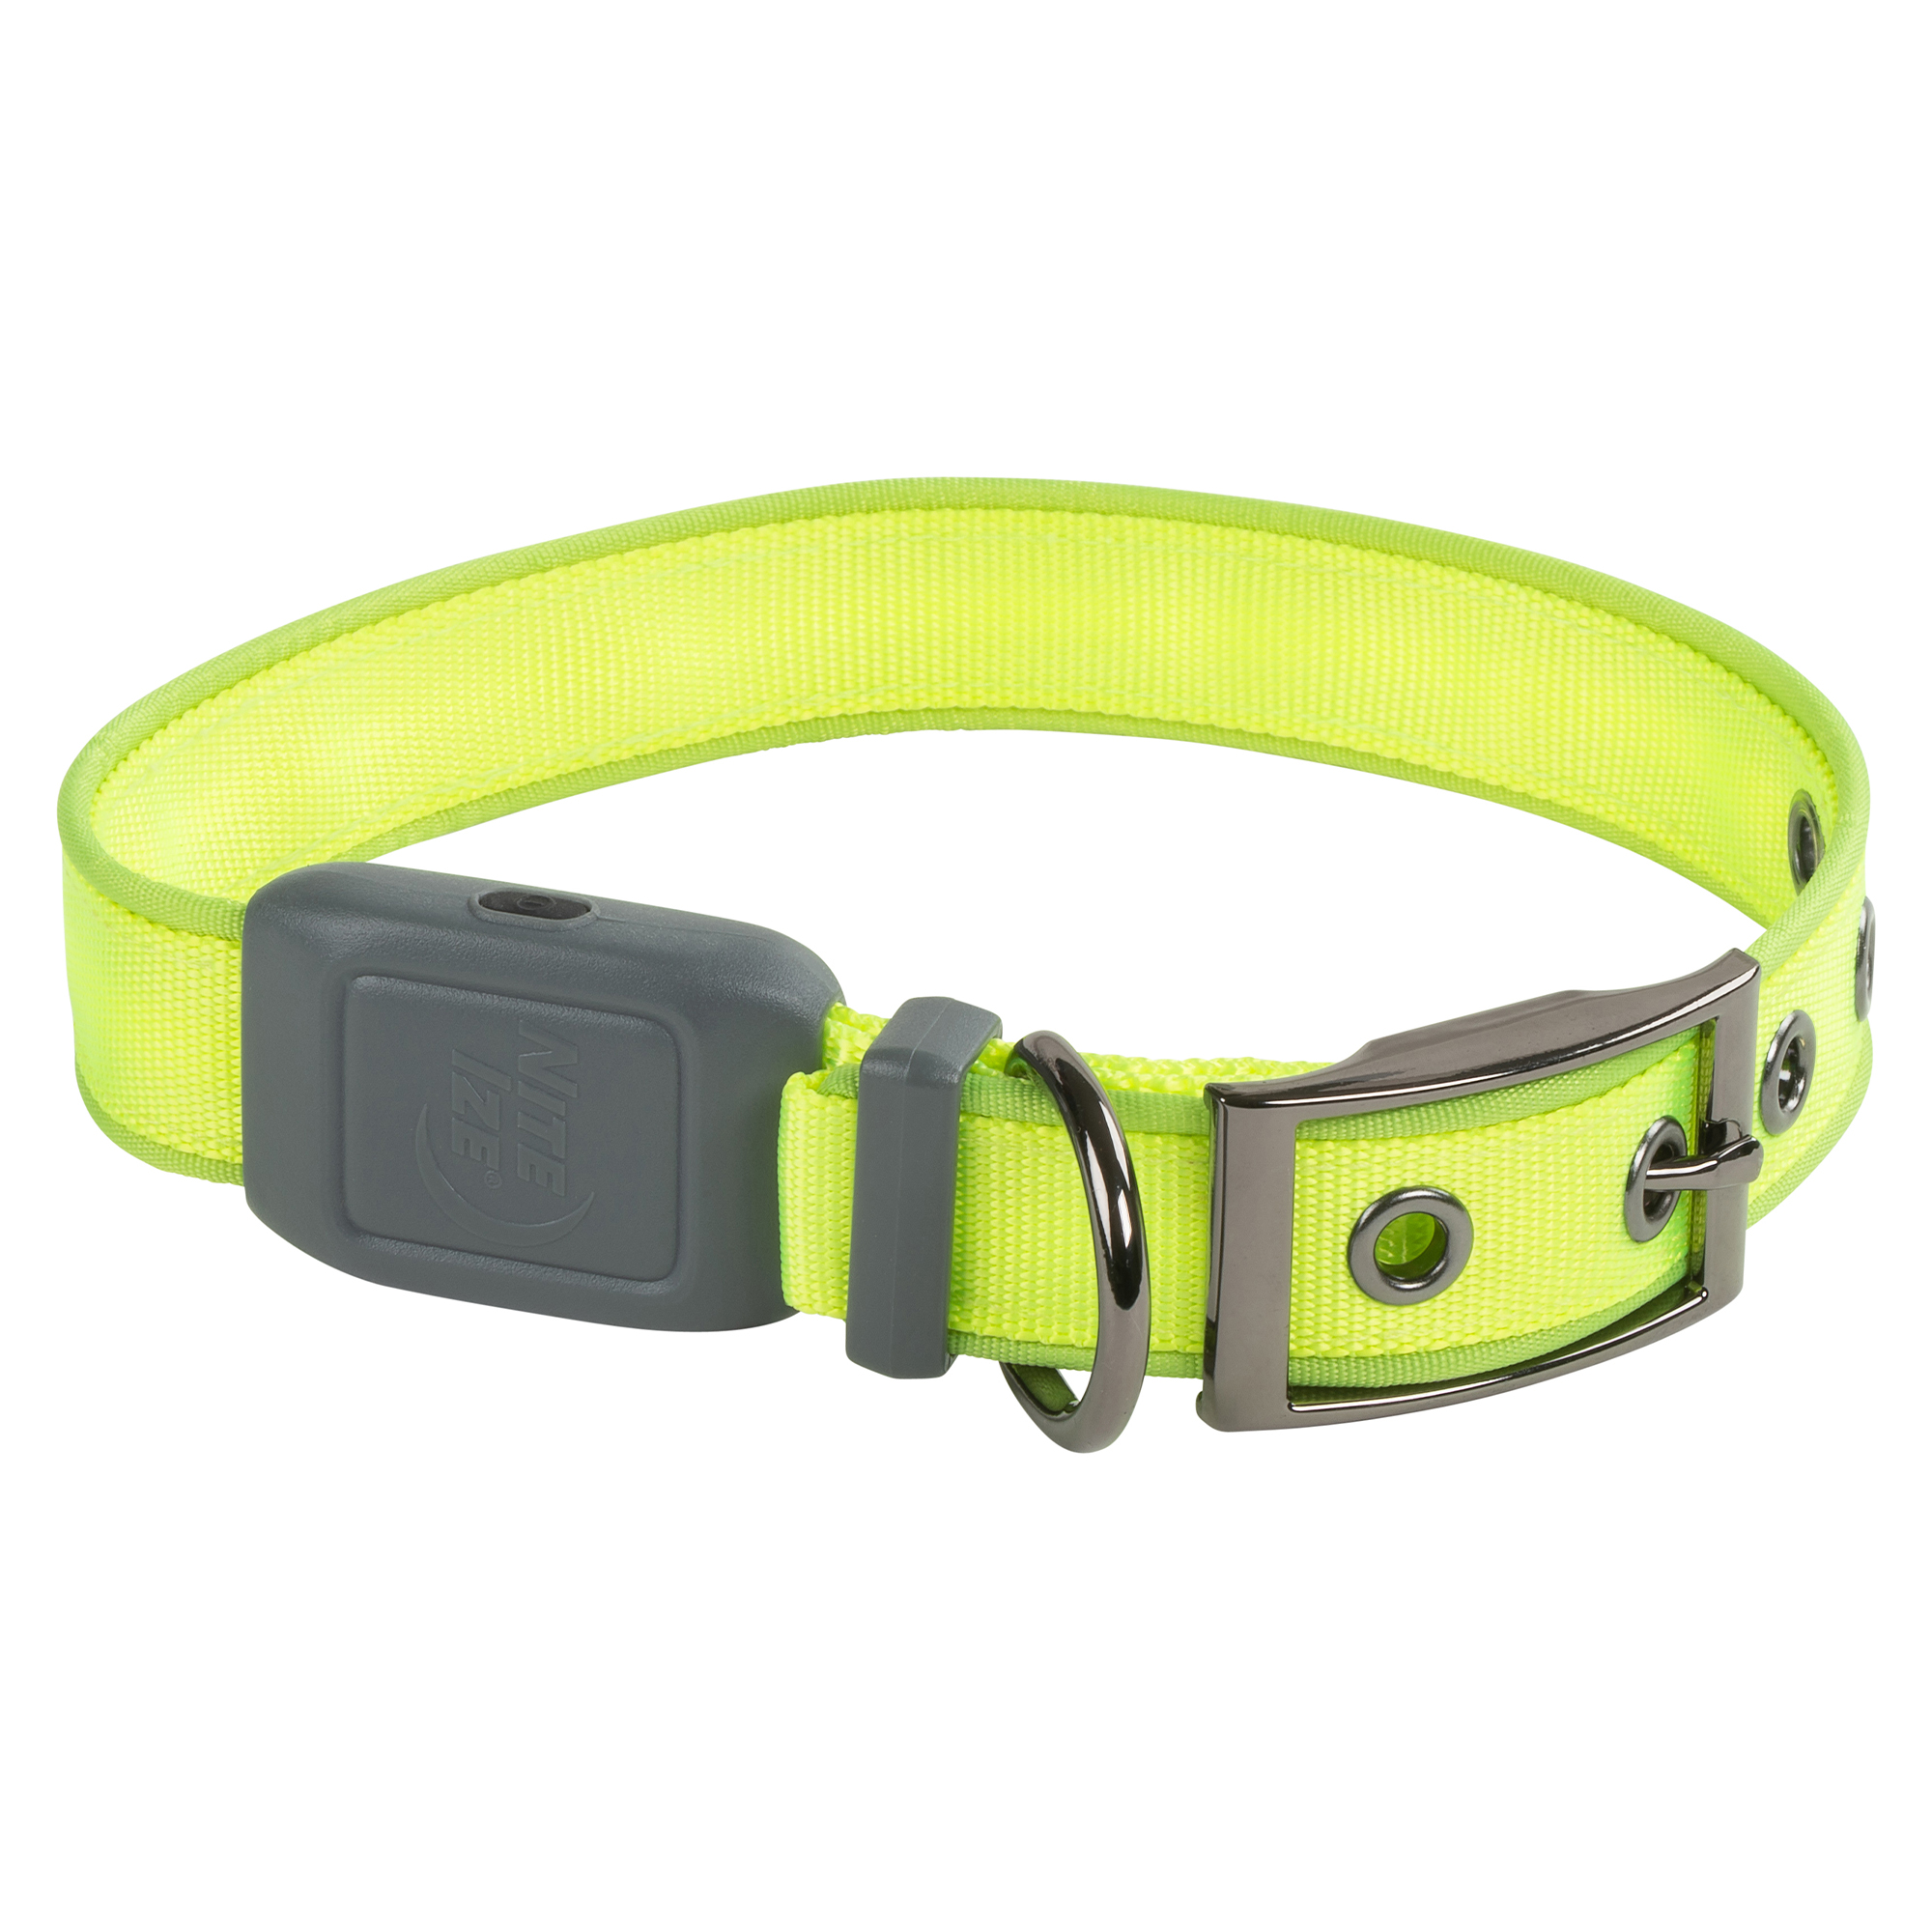 Nite Ize NiteDog Rechargeable LED Collar, Lime Green